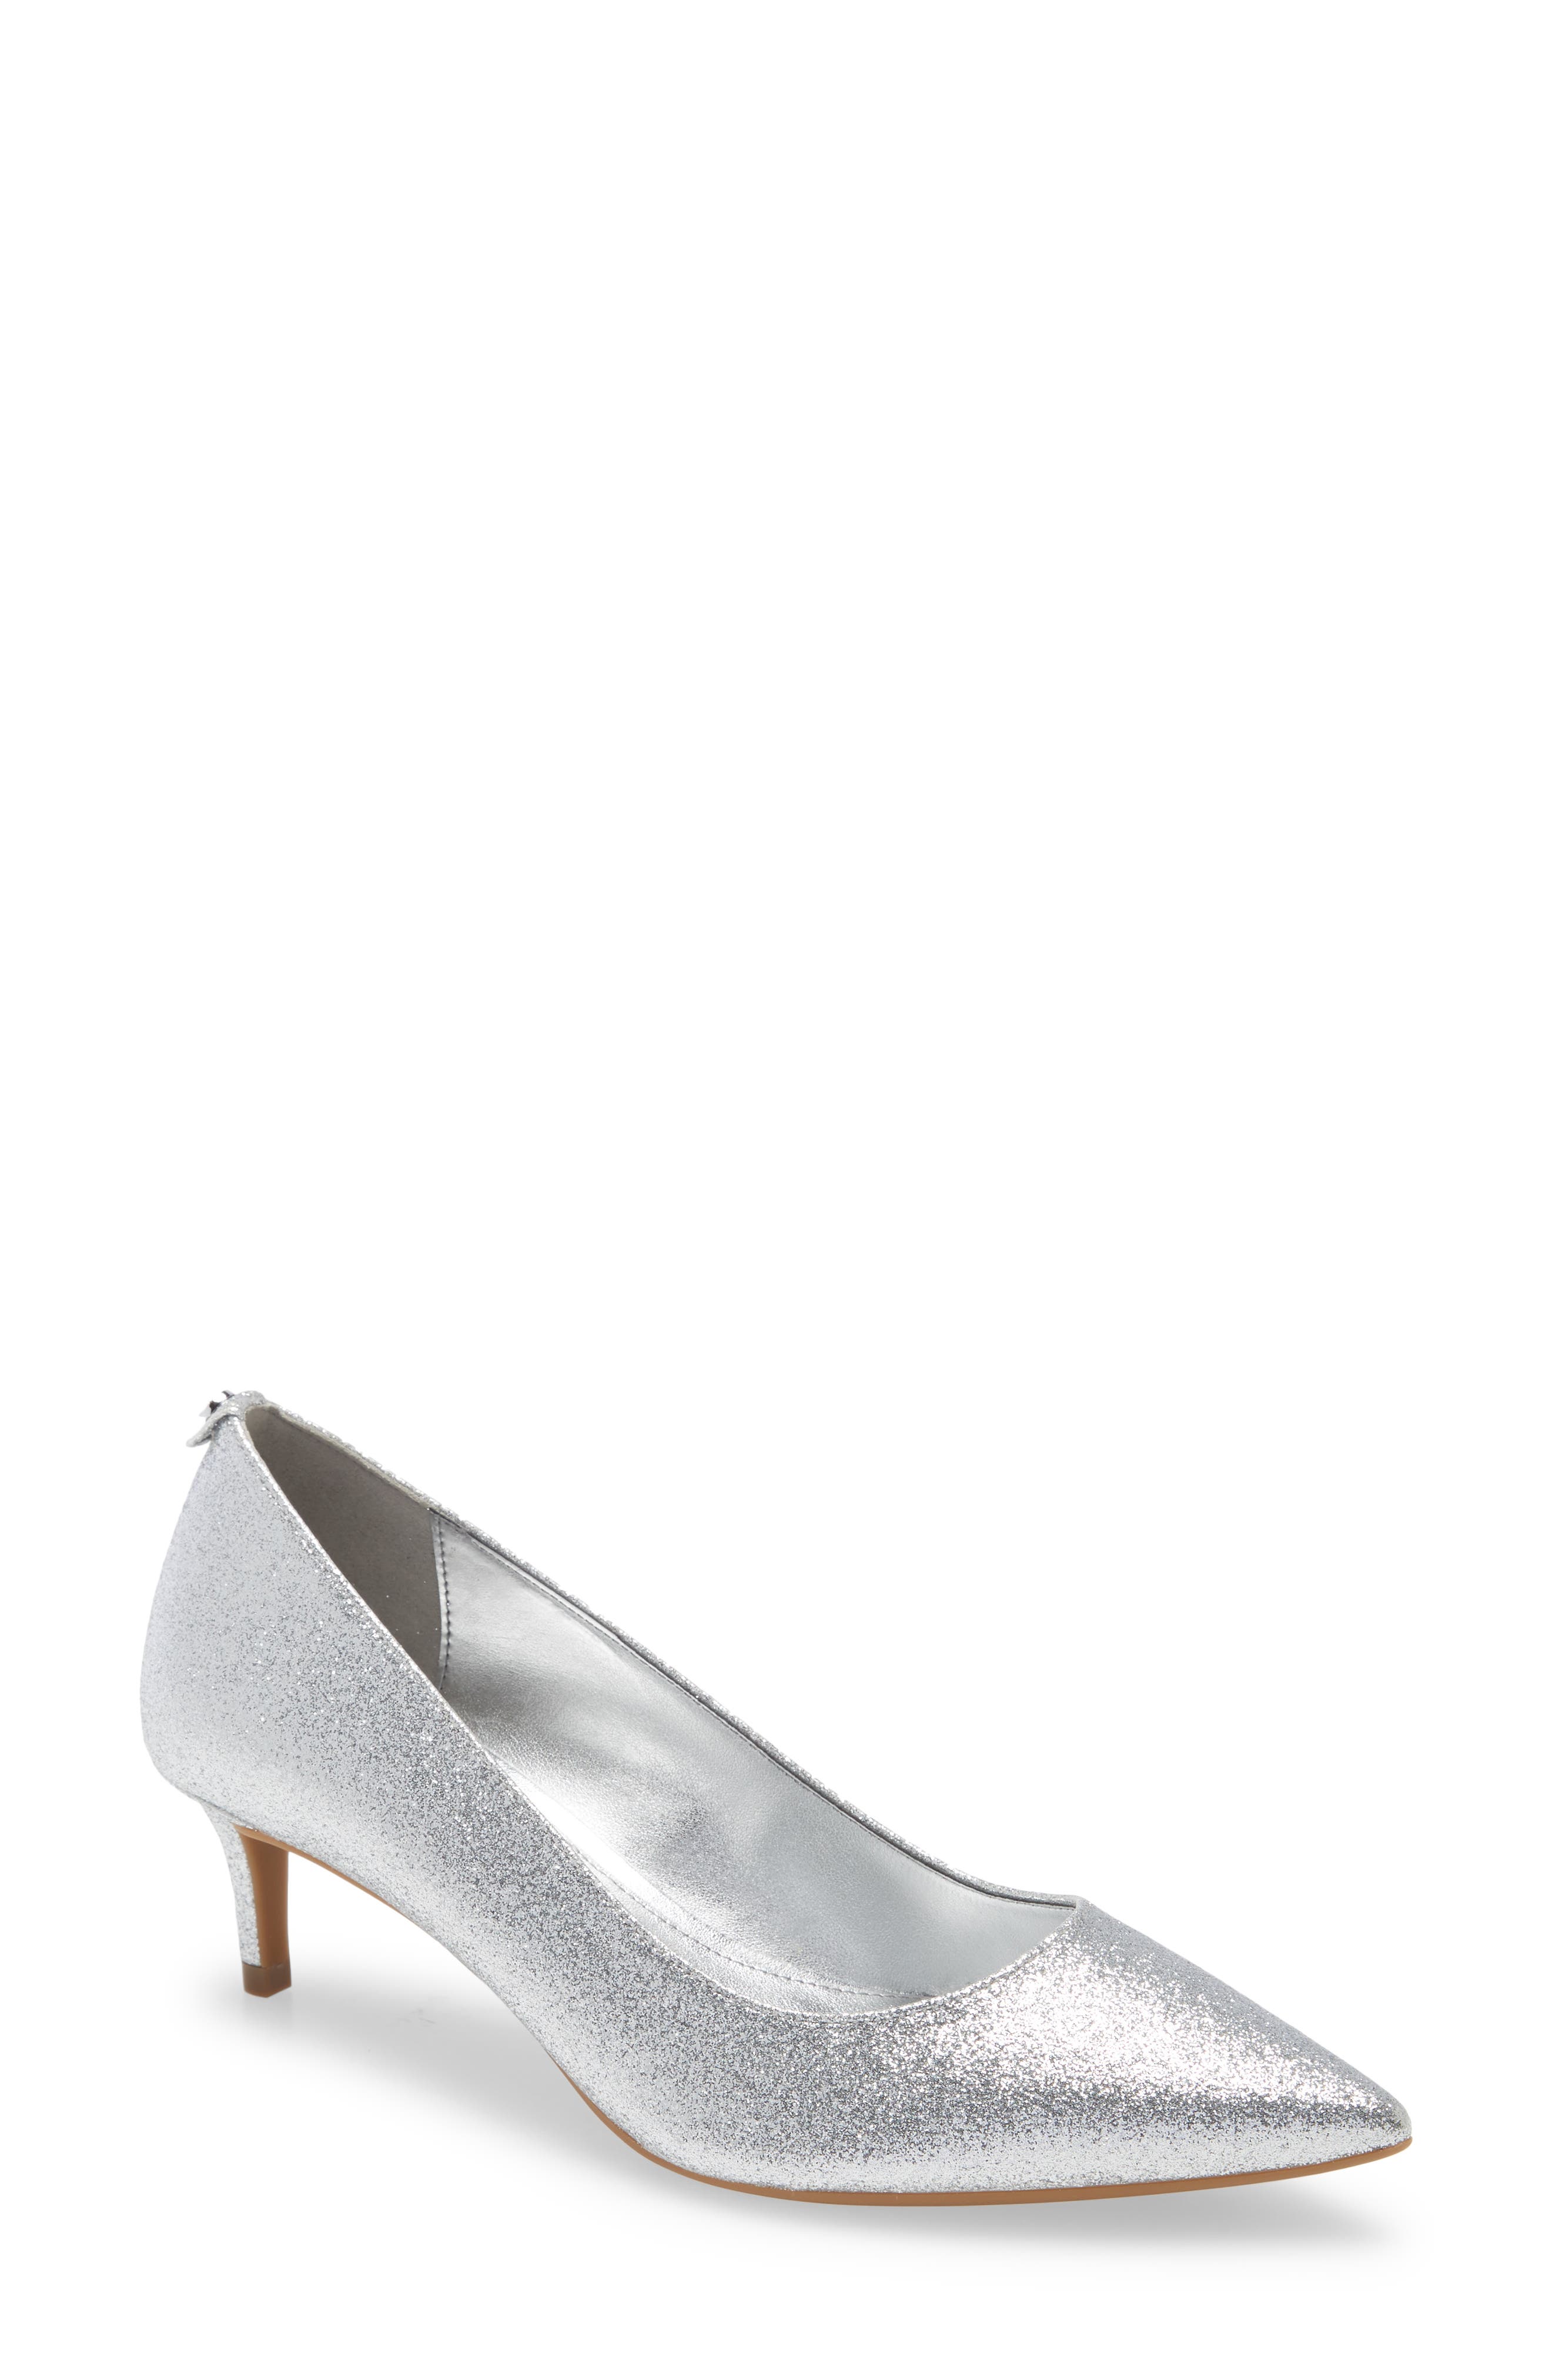 michael kors silver heels